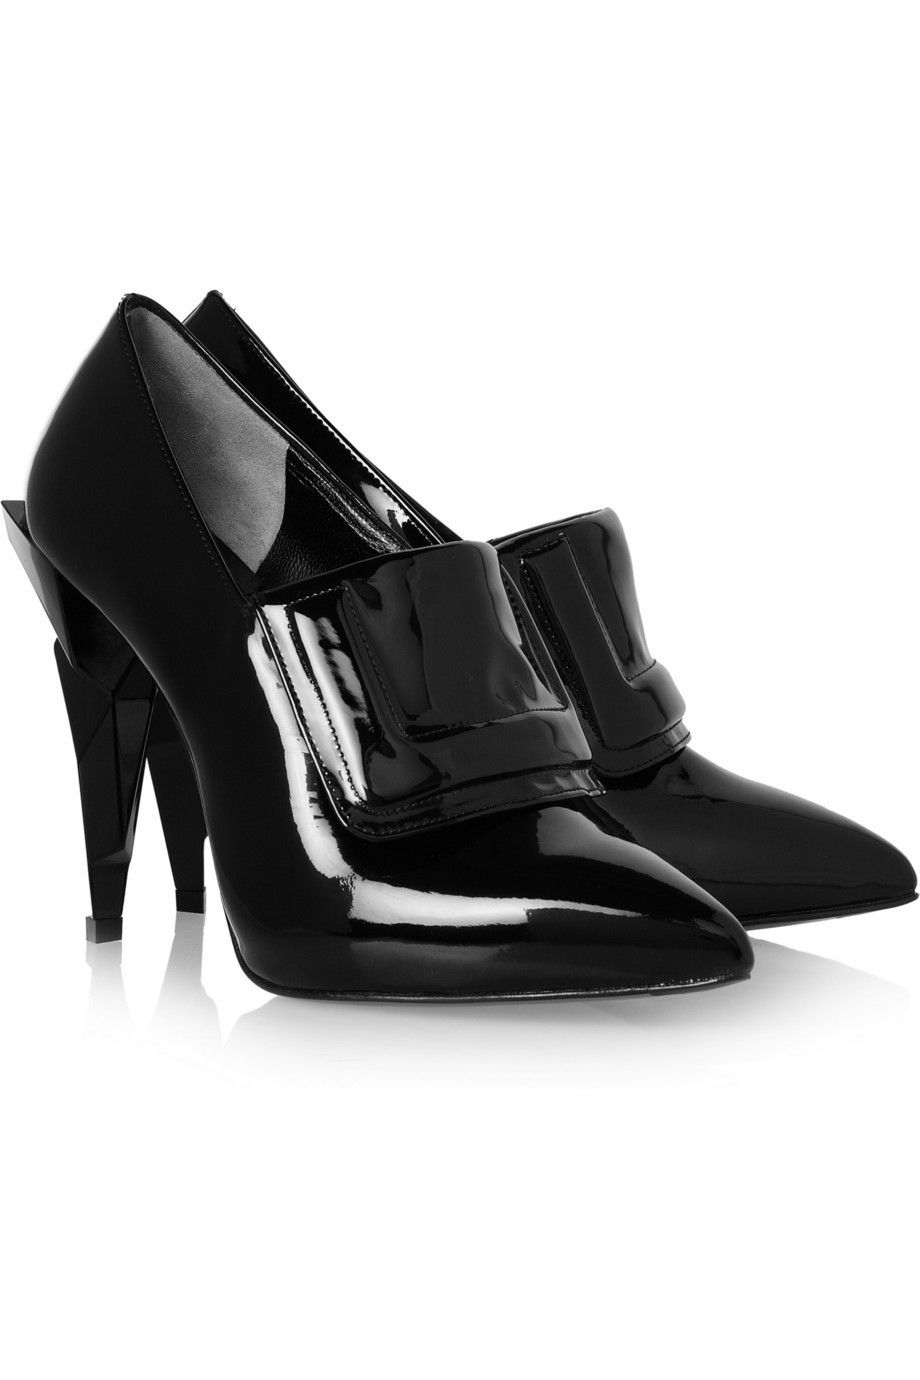 Footwear, White, Black, Tan, Leather, Beige, Fashion design, Basic pump, High heels, Dress shoe, 